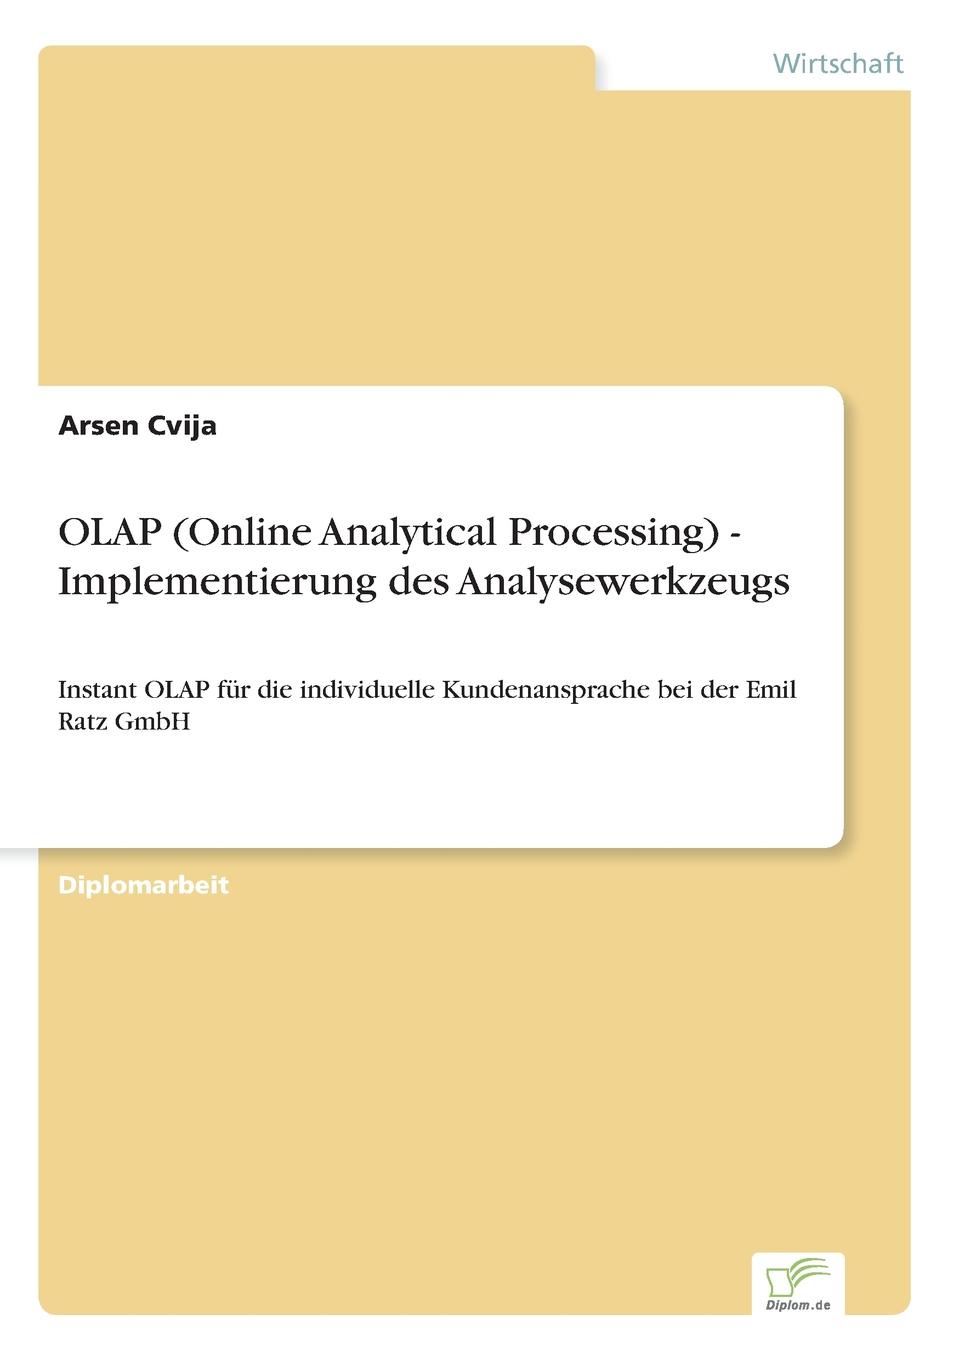 OLAP (Online Analytical Processing) - Implementierung des Analysewerkzeugs